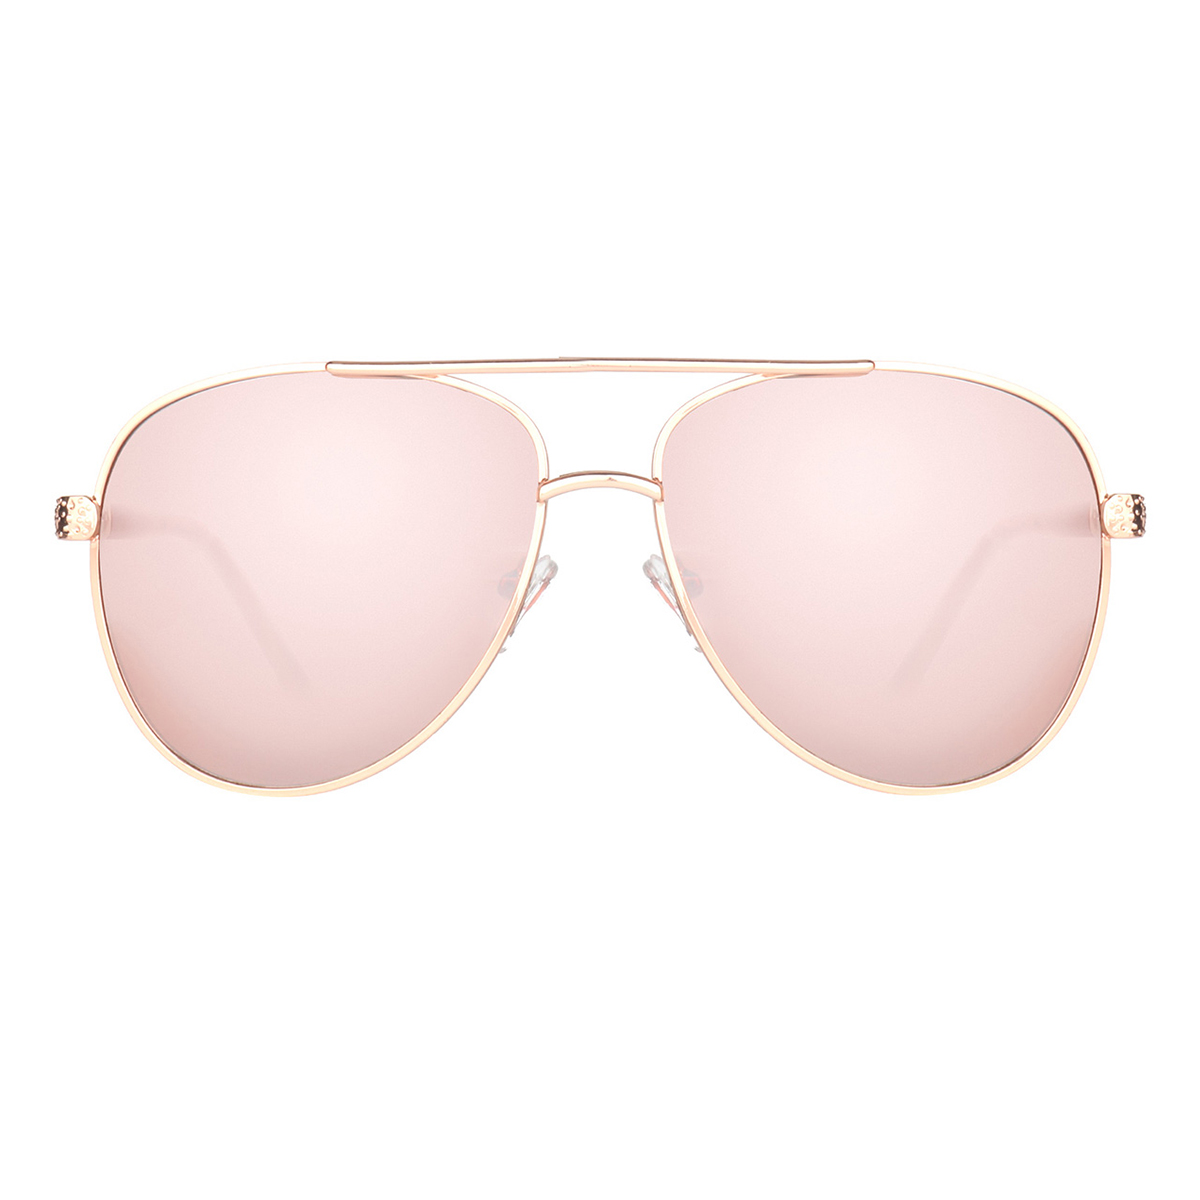 aviator rosegold sunglasses